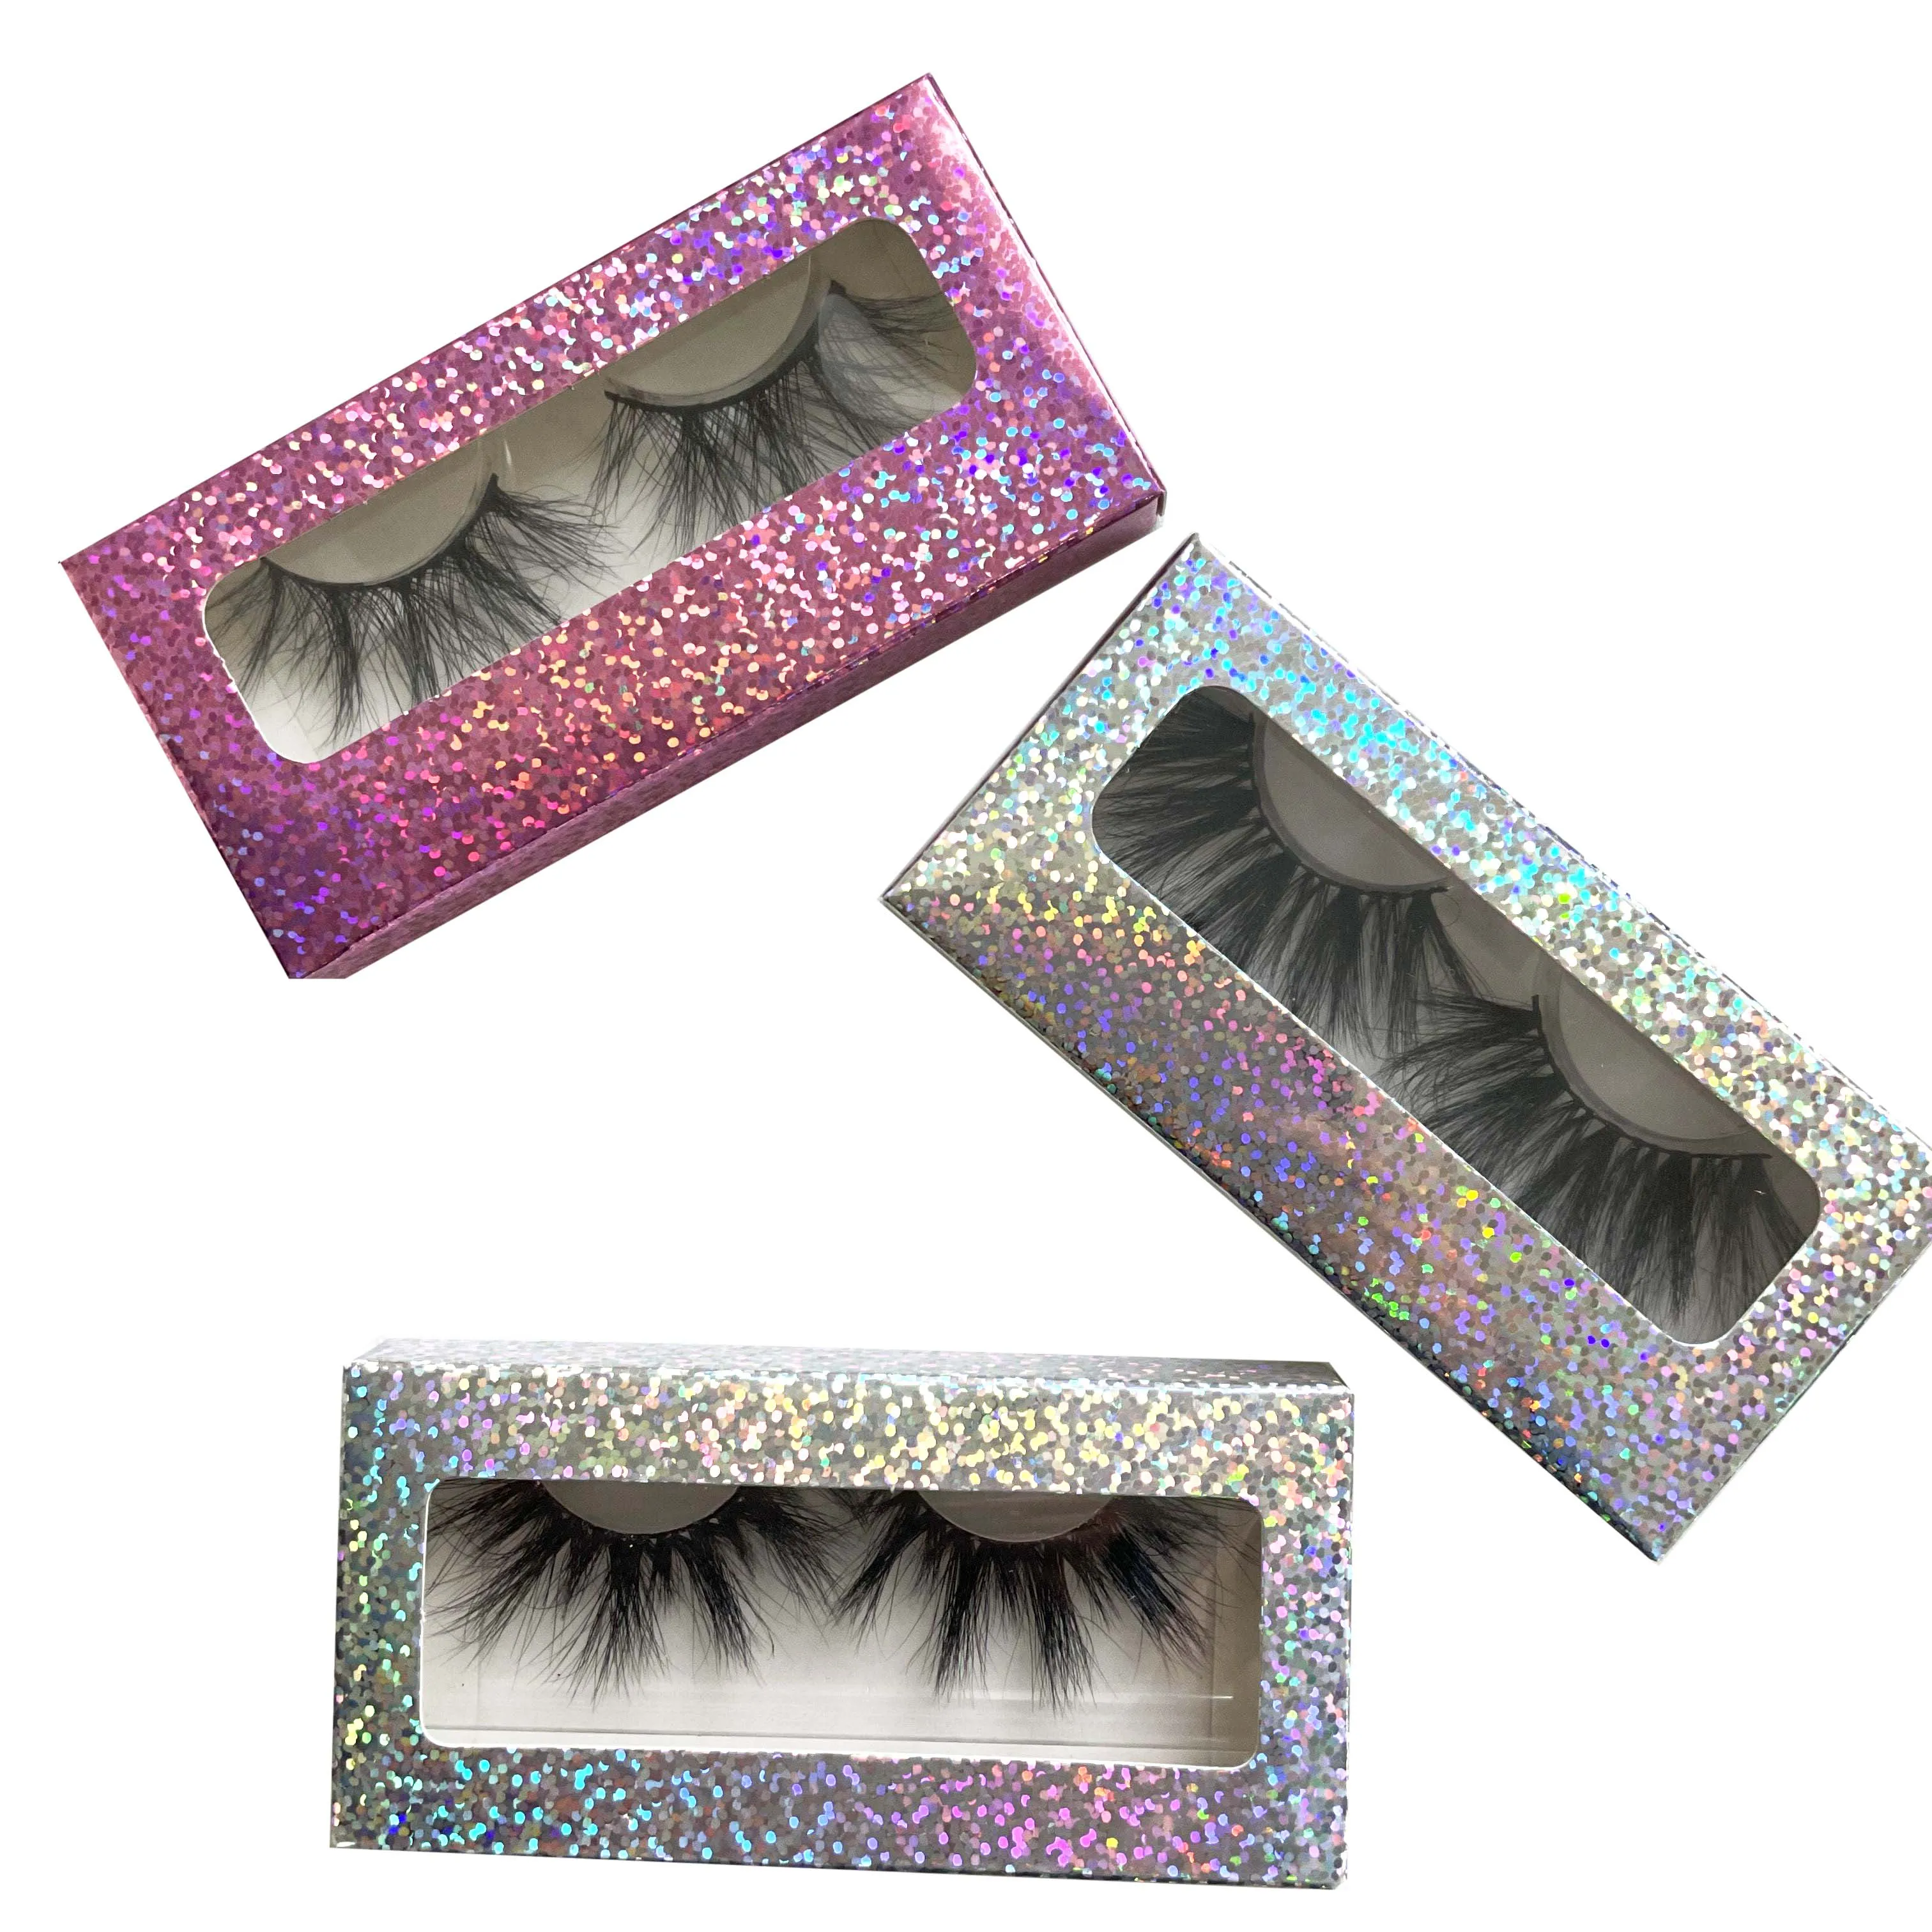 

Wholesale Make Own Brand Private Label Faux Mink 25mm Eyelashes Vendor Fake Lashes 3D Real Mink Eyelashes, Black